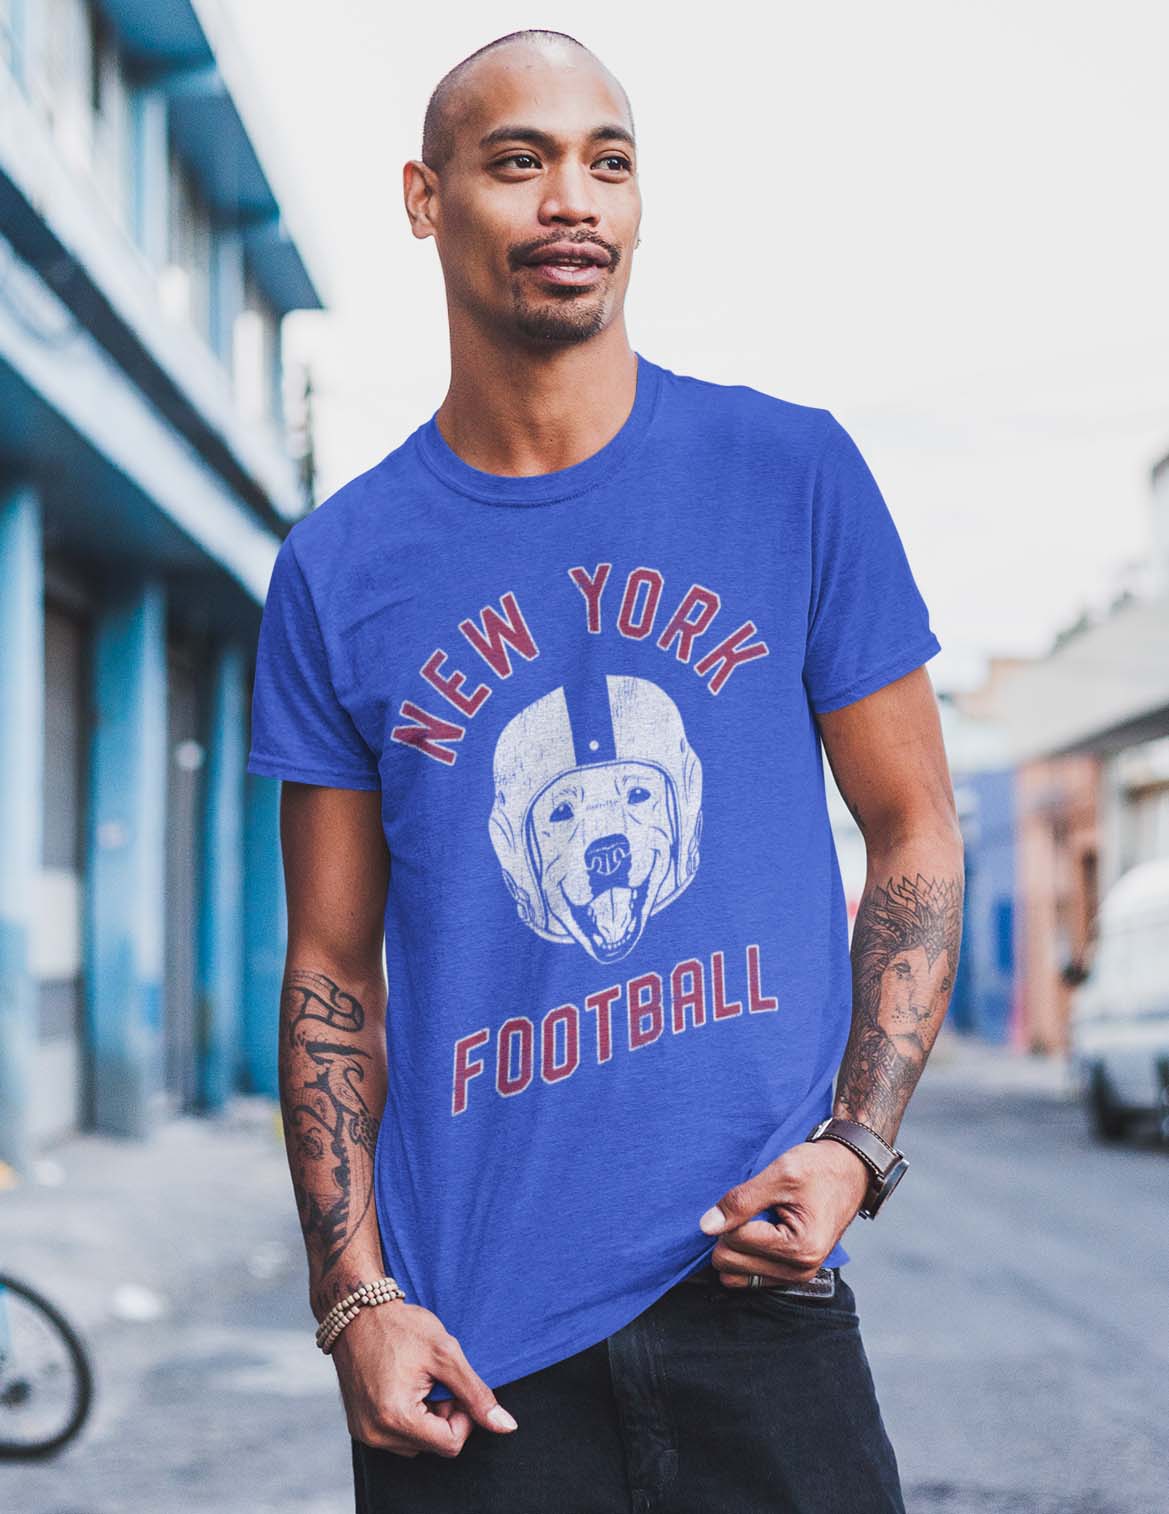 New York Football Labrador T-Shirt